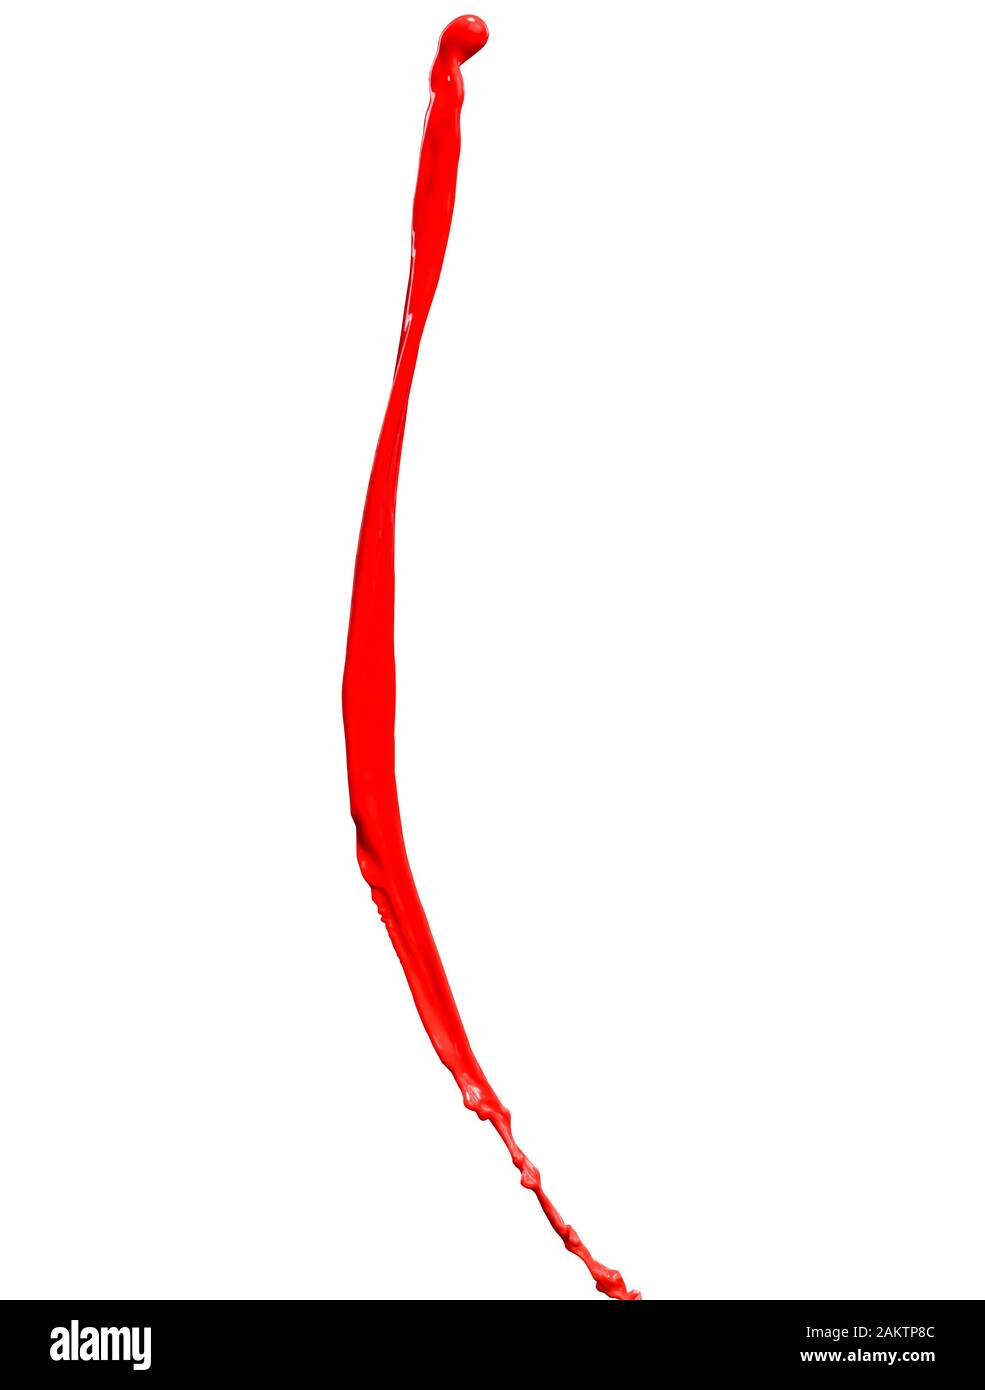 espléndida pintura roja salpicada aislada sobre fondo blanco Foto de stock